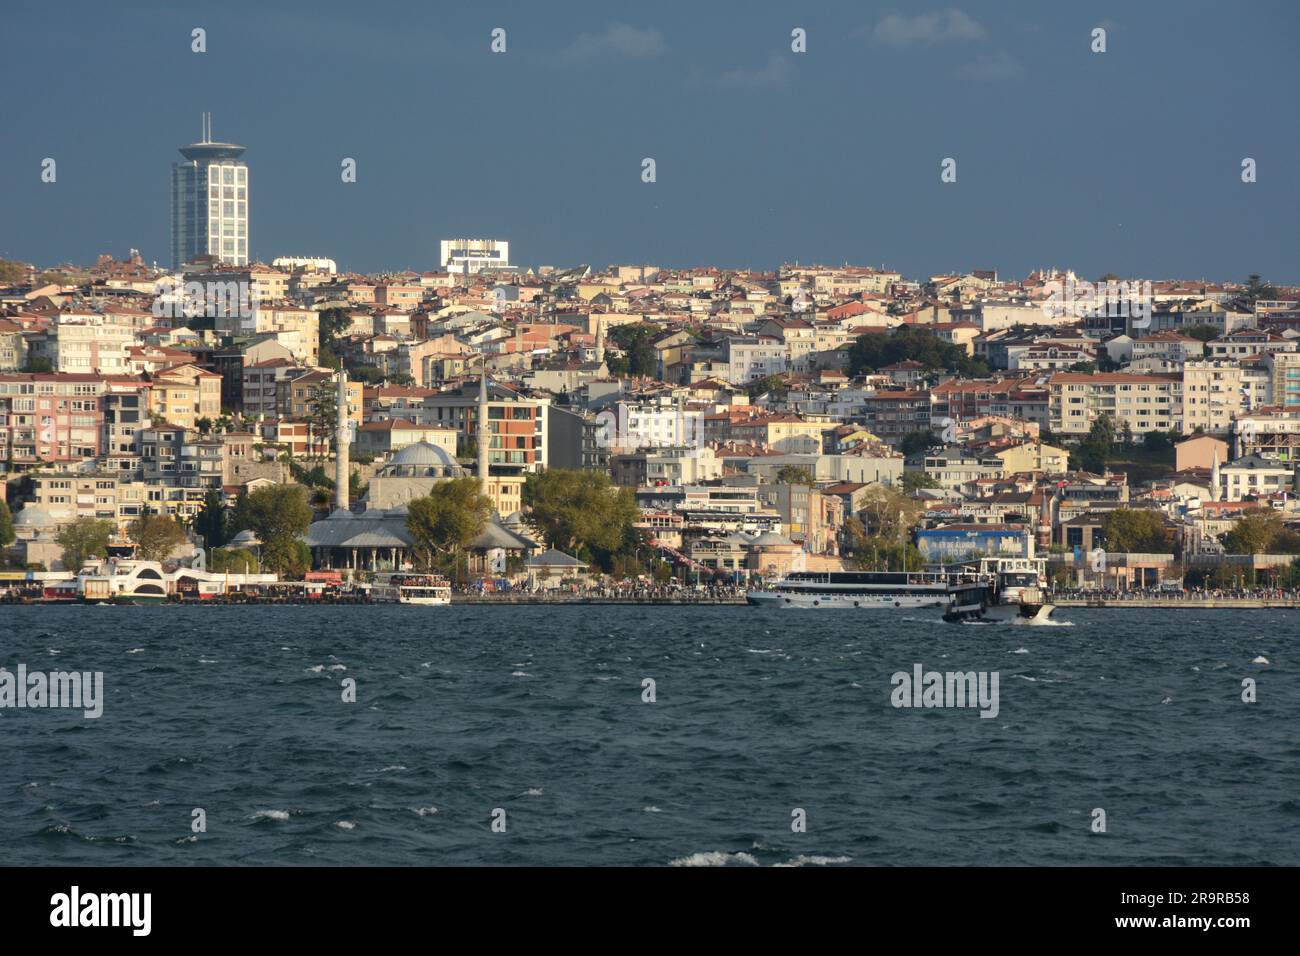 Looking across the Strait of Bosphorus from Beyoglu on the European side to Uskudar on the Asian side of Istanbul, Turkiye / Turkey. Stock Photo